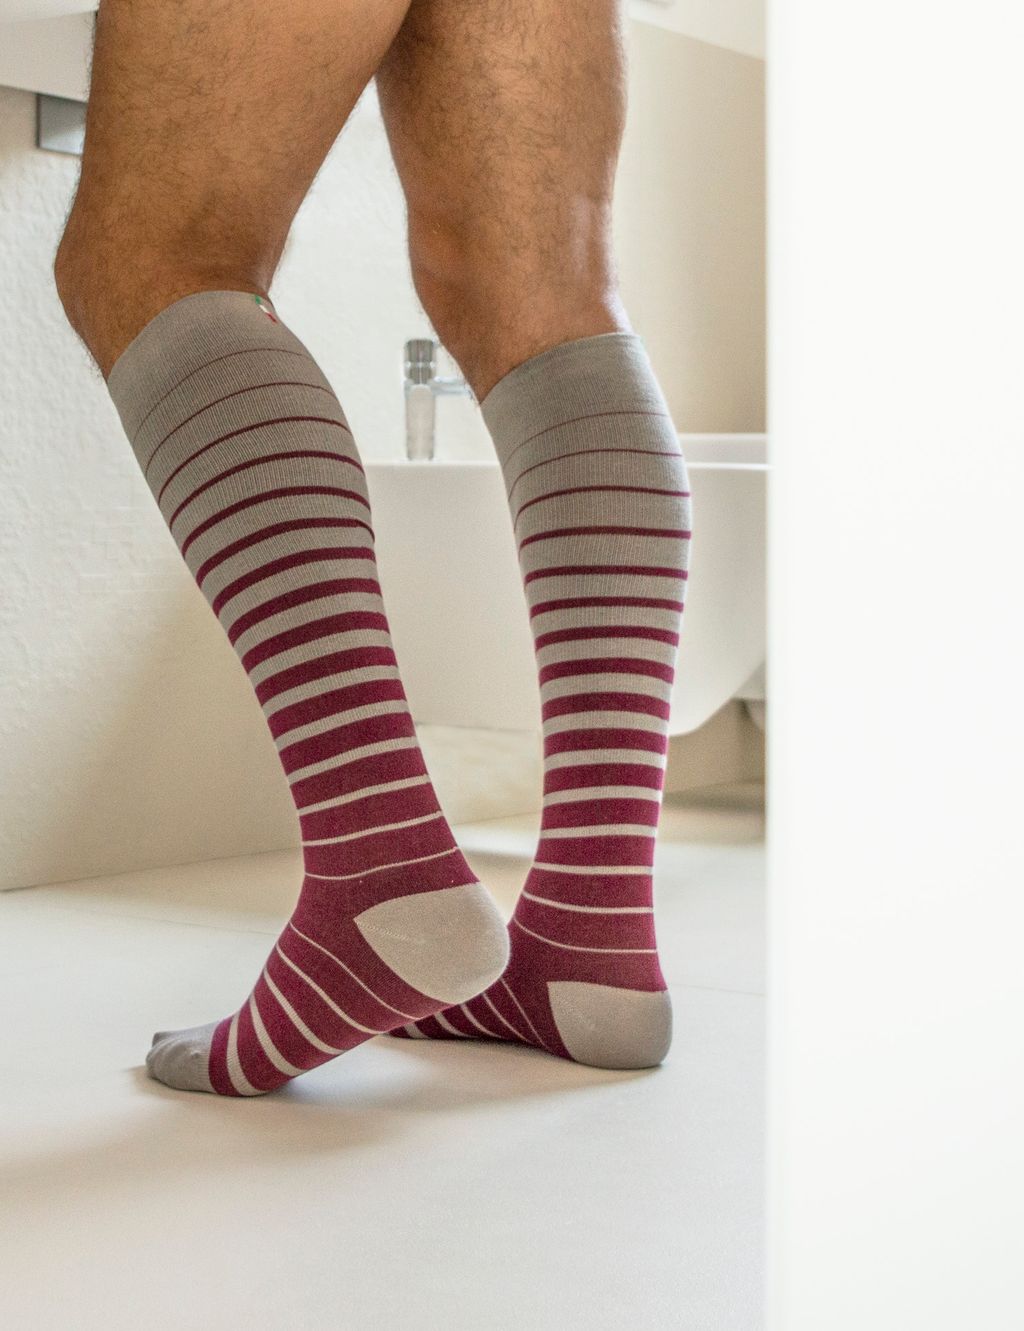 Relaxsan Fancy Cotton Socks Гольфы с хлопком 1 класс компрессии унисекс, р. 4, арт. 820 Fancy (18-22 mm Hg), бордо-полоски, пара, 1 шт.